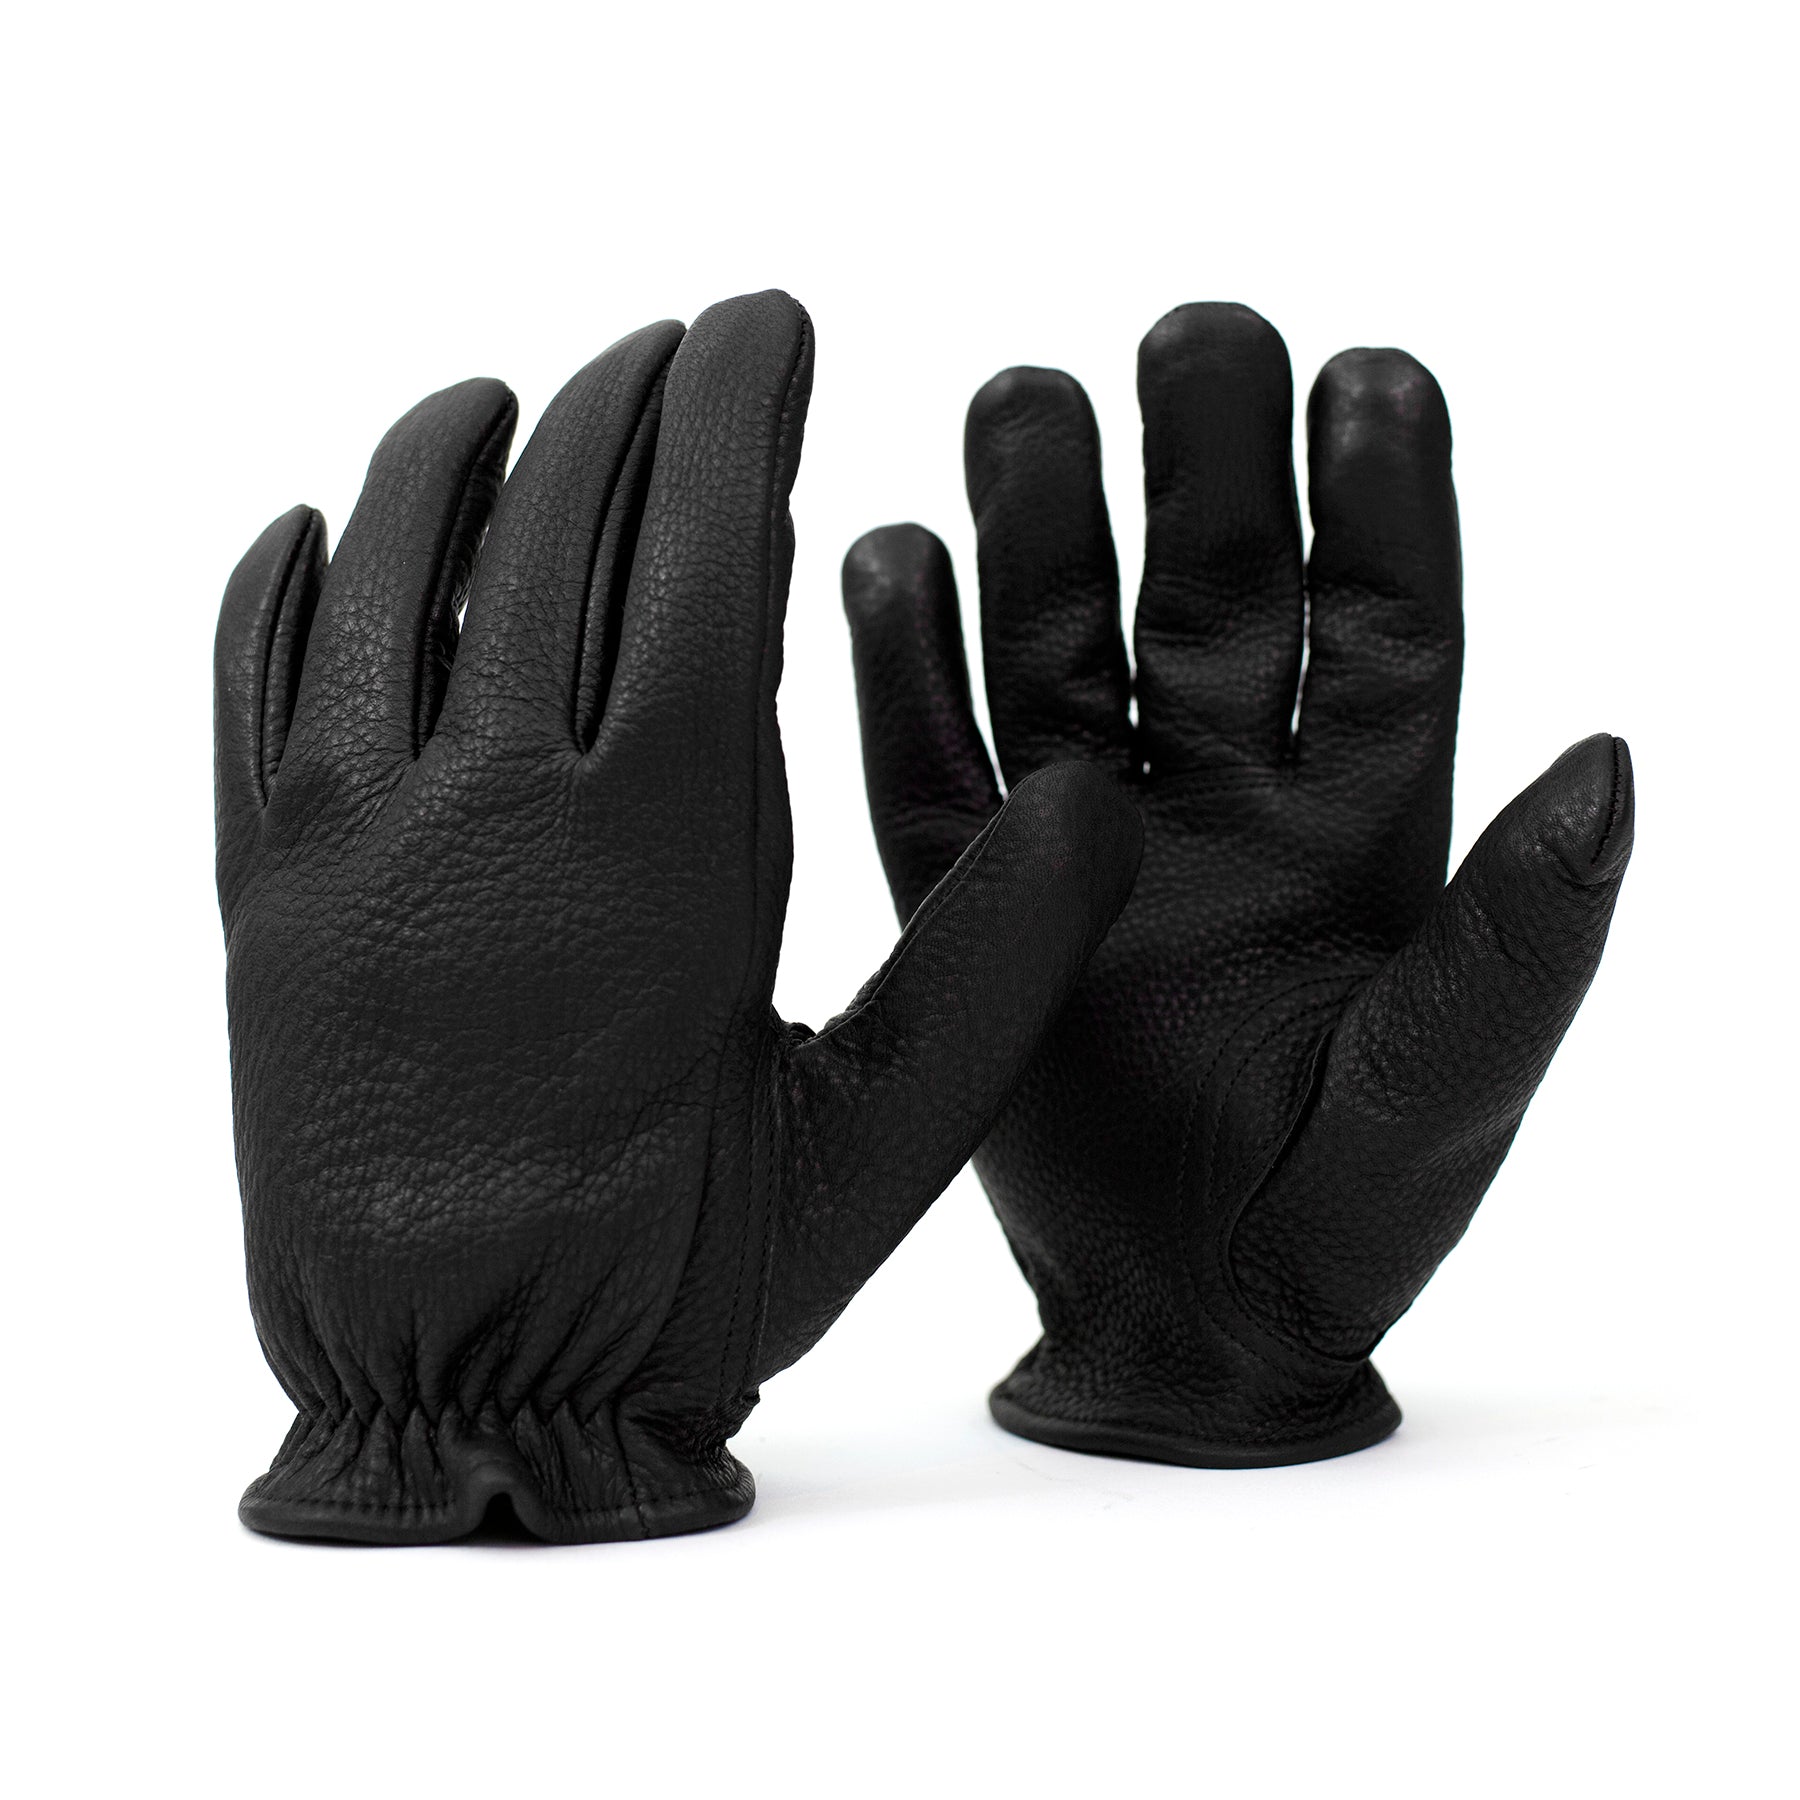 Kevlar gloves, moto gloves, leather glove, kevlar moto glove, kevlar lined gloves, black gloves, made in usa, red clouds gloves